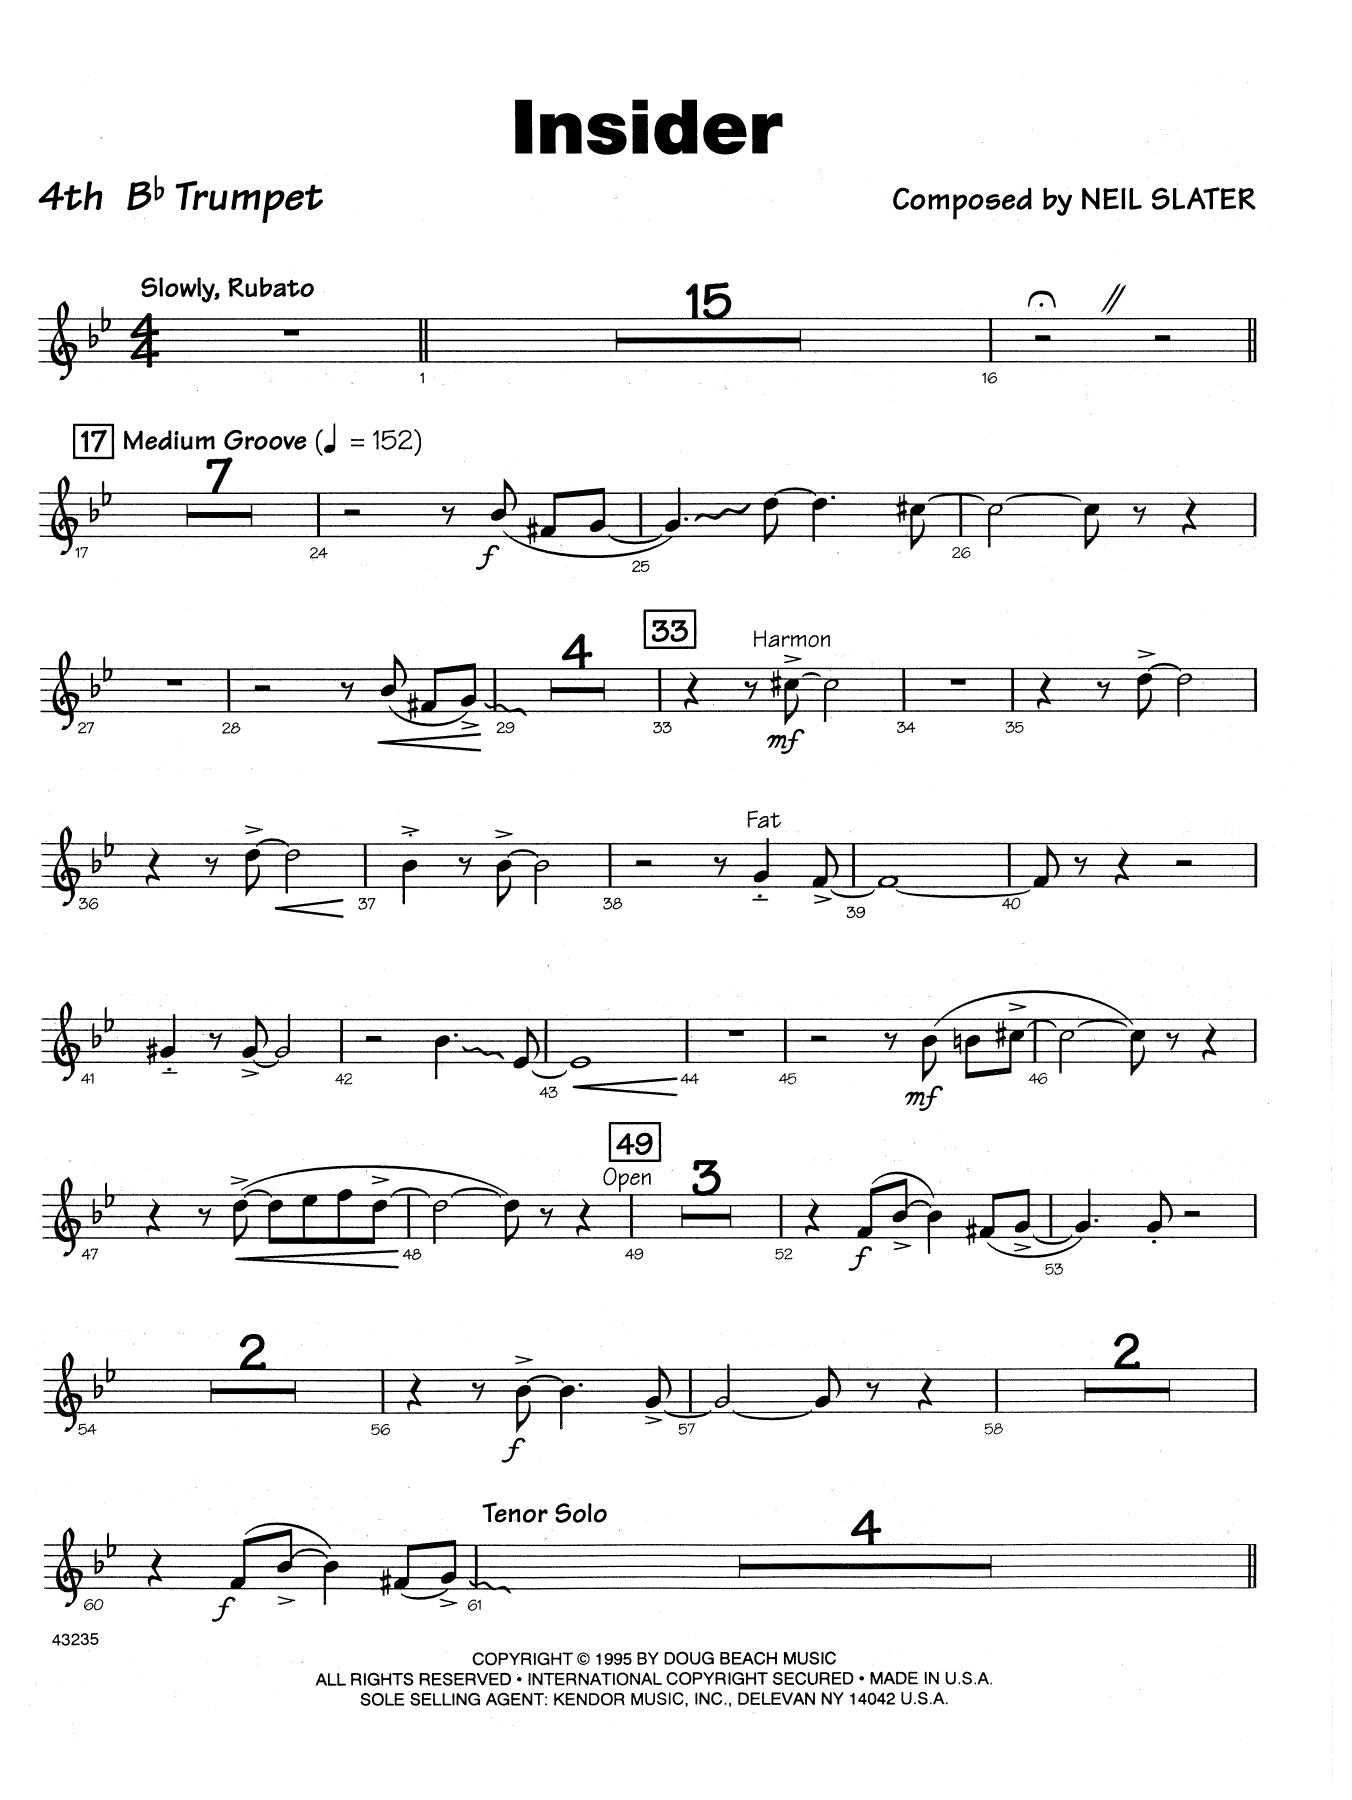 Download Neil Slater Insider - 4th Bb Trumpet Sheet Music